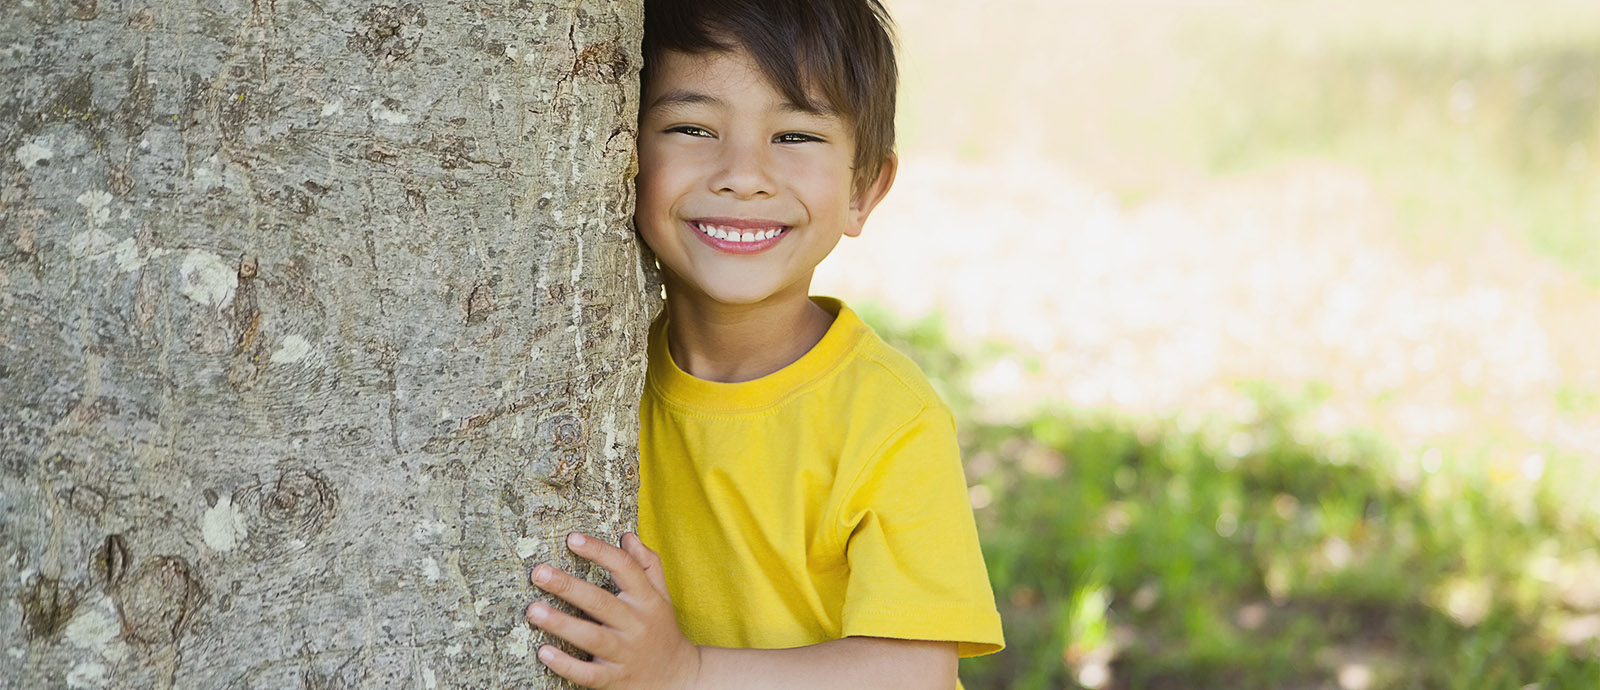 slide-smiling-boy-on-tree-2